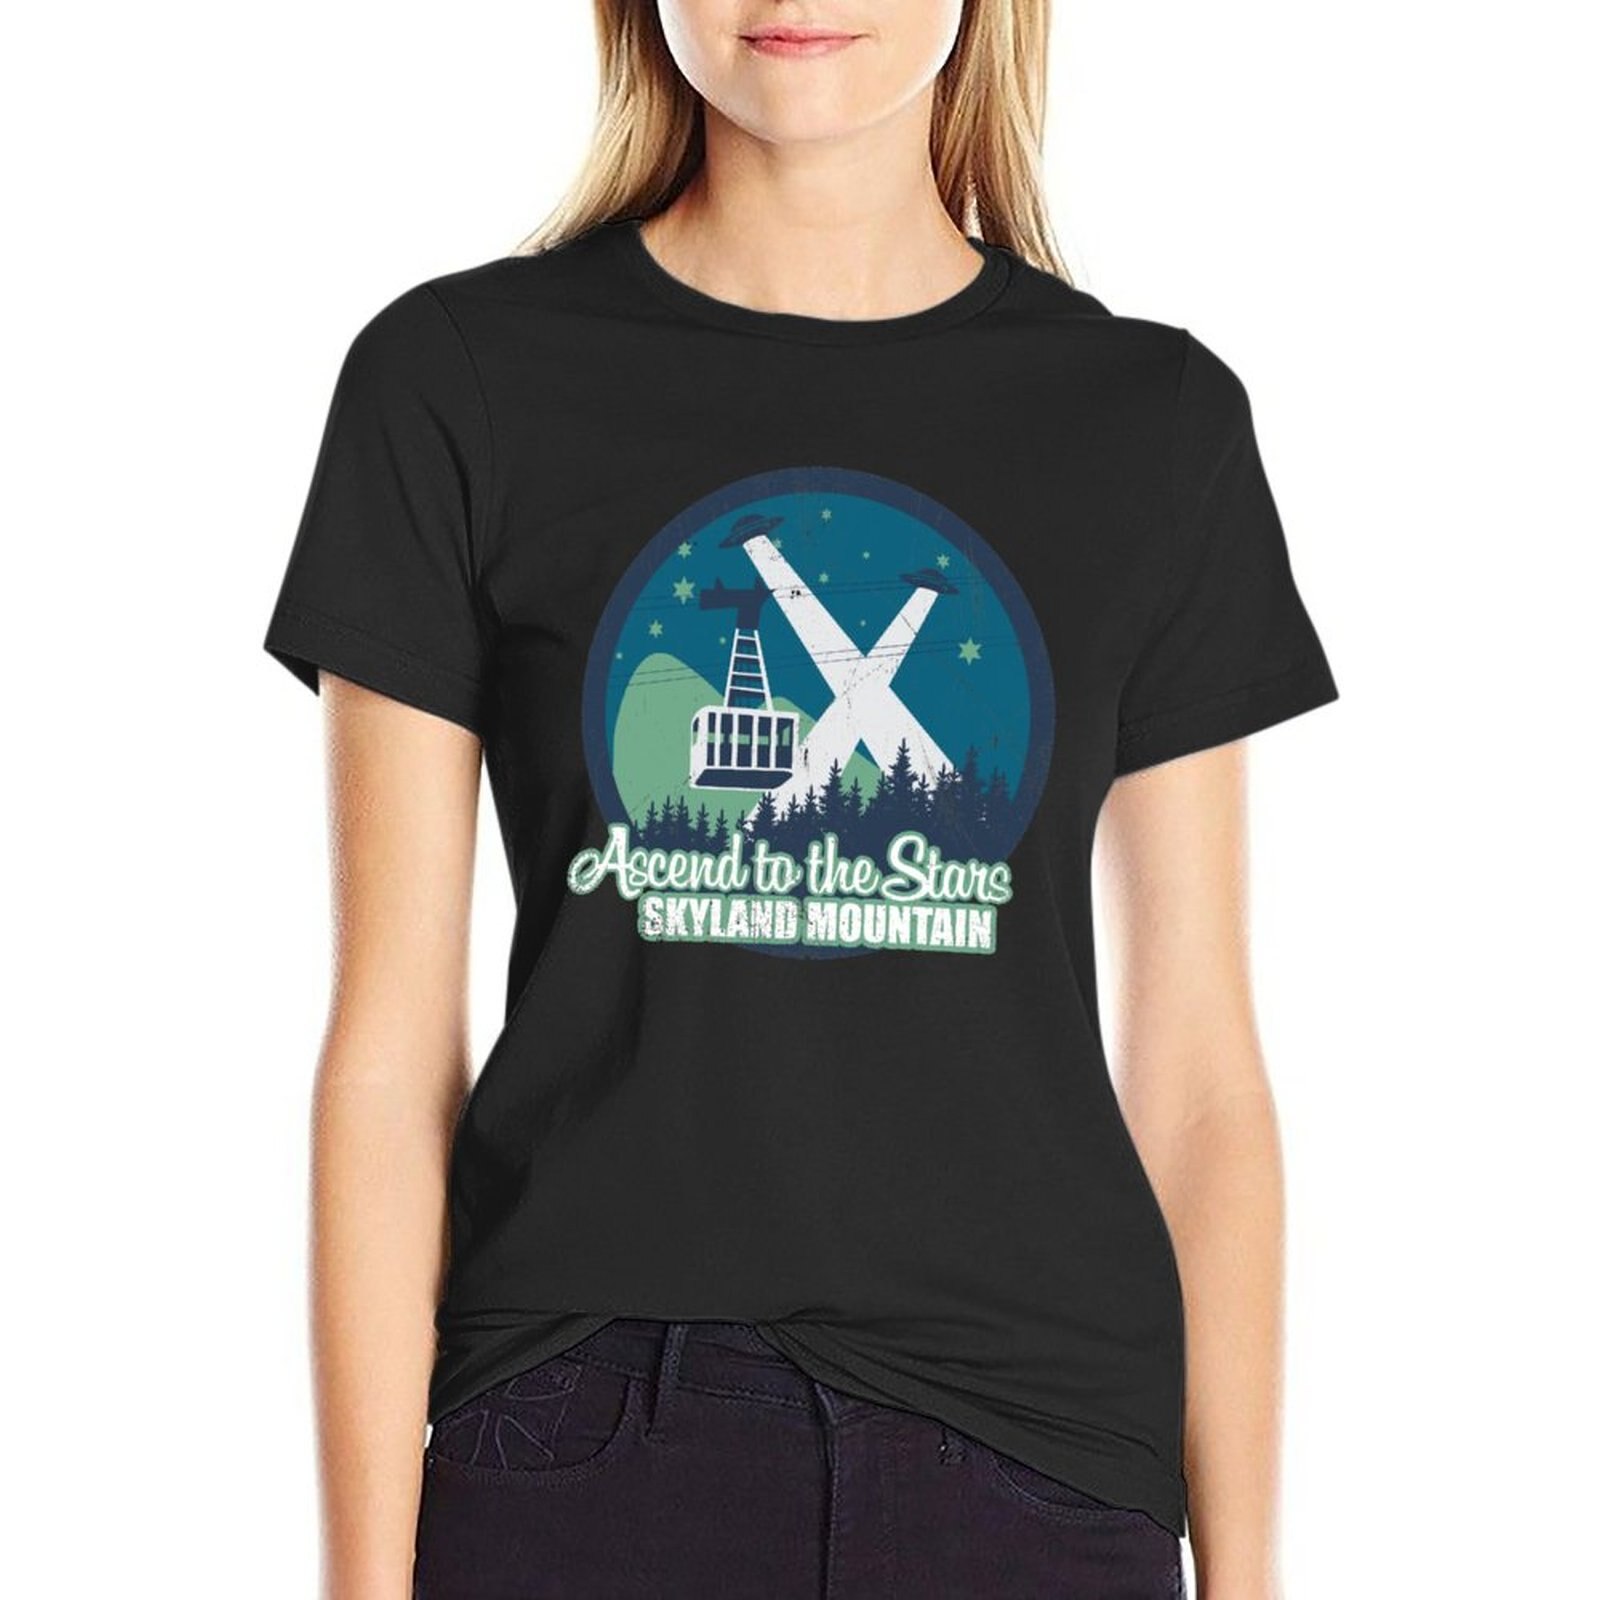 Ascend to the Stars III-디스트레스드 티셔츠, 한국 패션 빈티지 티셔츠, 여성용 운동 셔츠